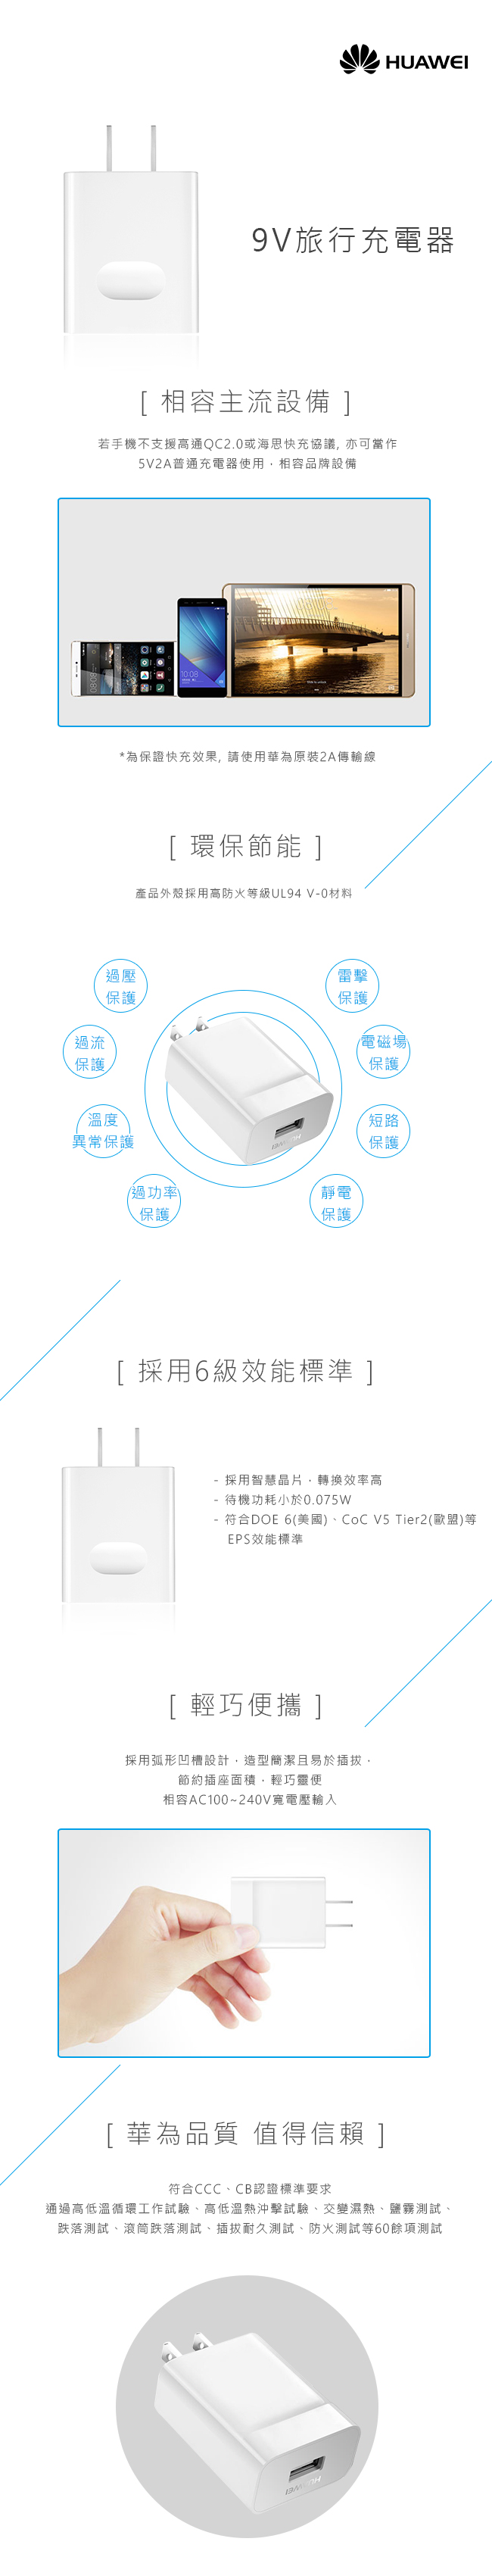 HUAWEI華為 原廠9V/2A 快充 旅行充電器_手機內附款(台灣盒裝拆售款)